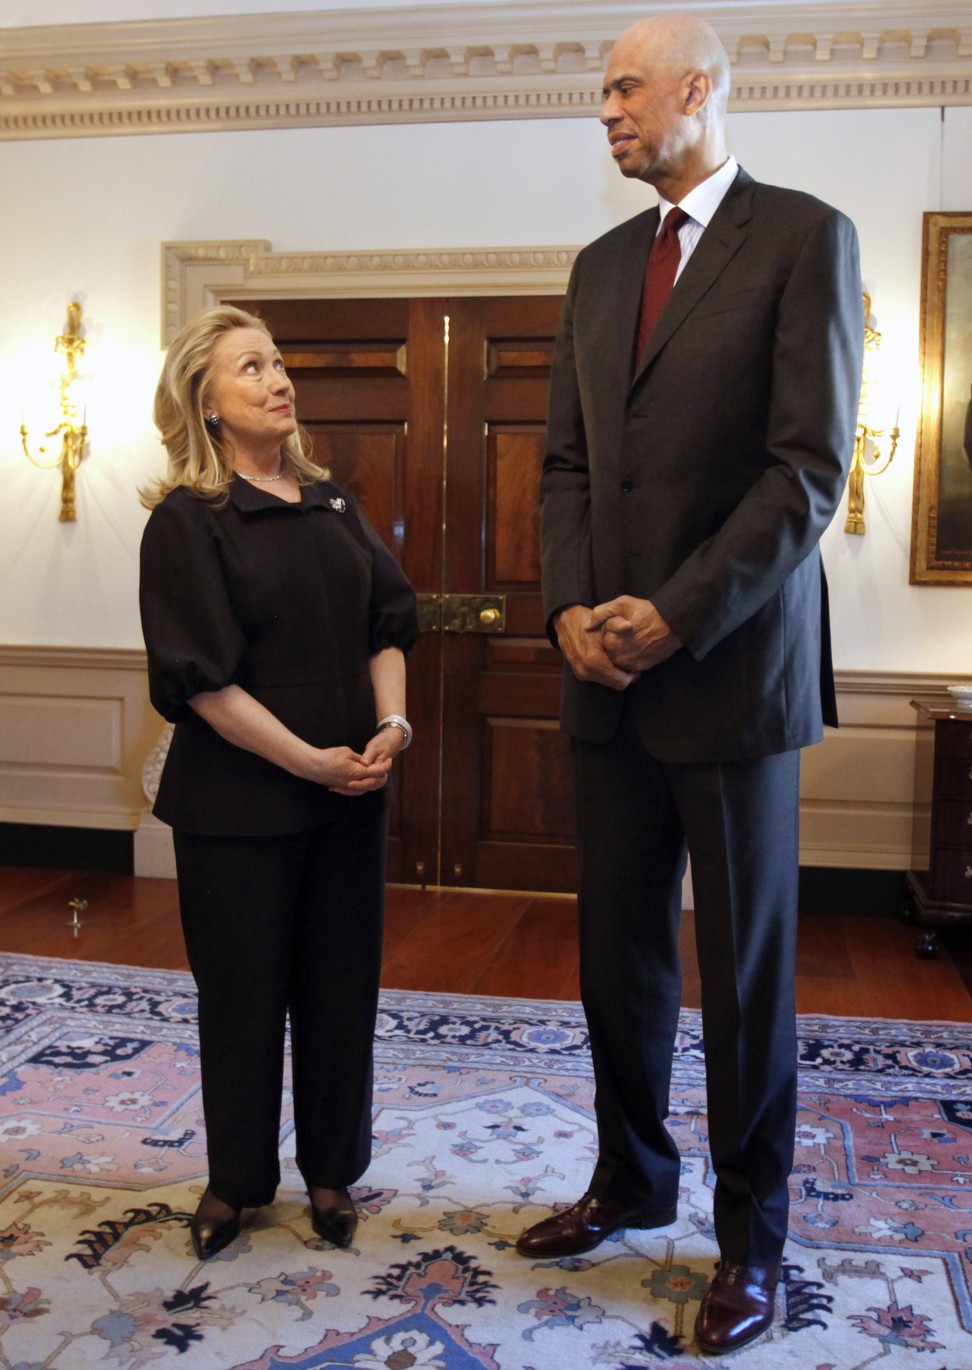 Hillary Clinton with global cultural ambassador and former NBA basketball star Kareem Abdul-Jabbar in January 2012 at the State Department in Washington. Photo: AP